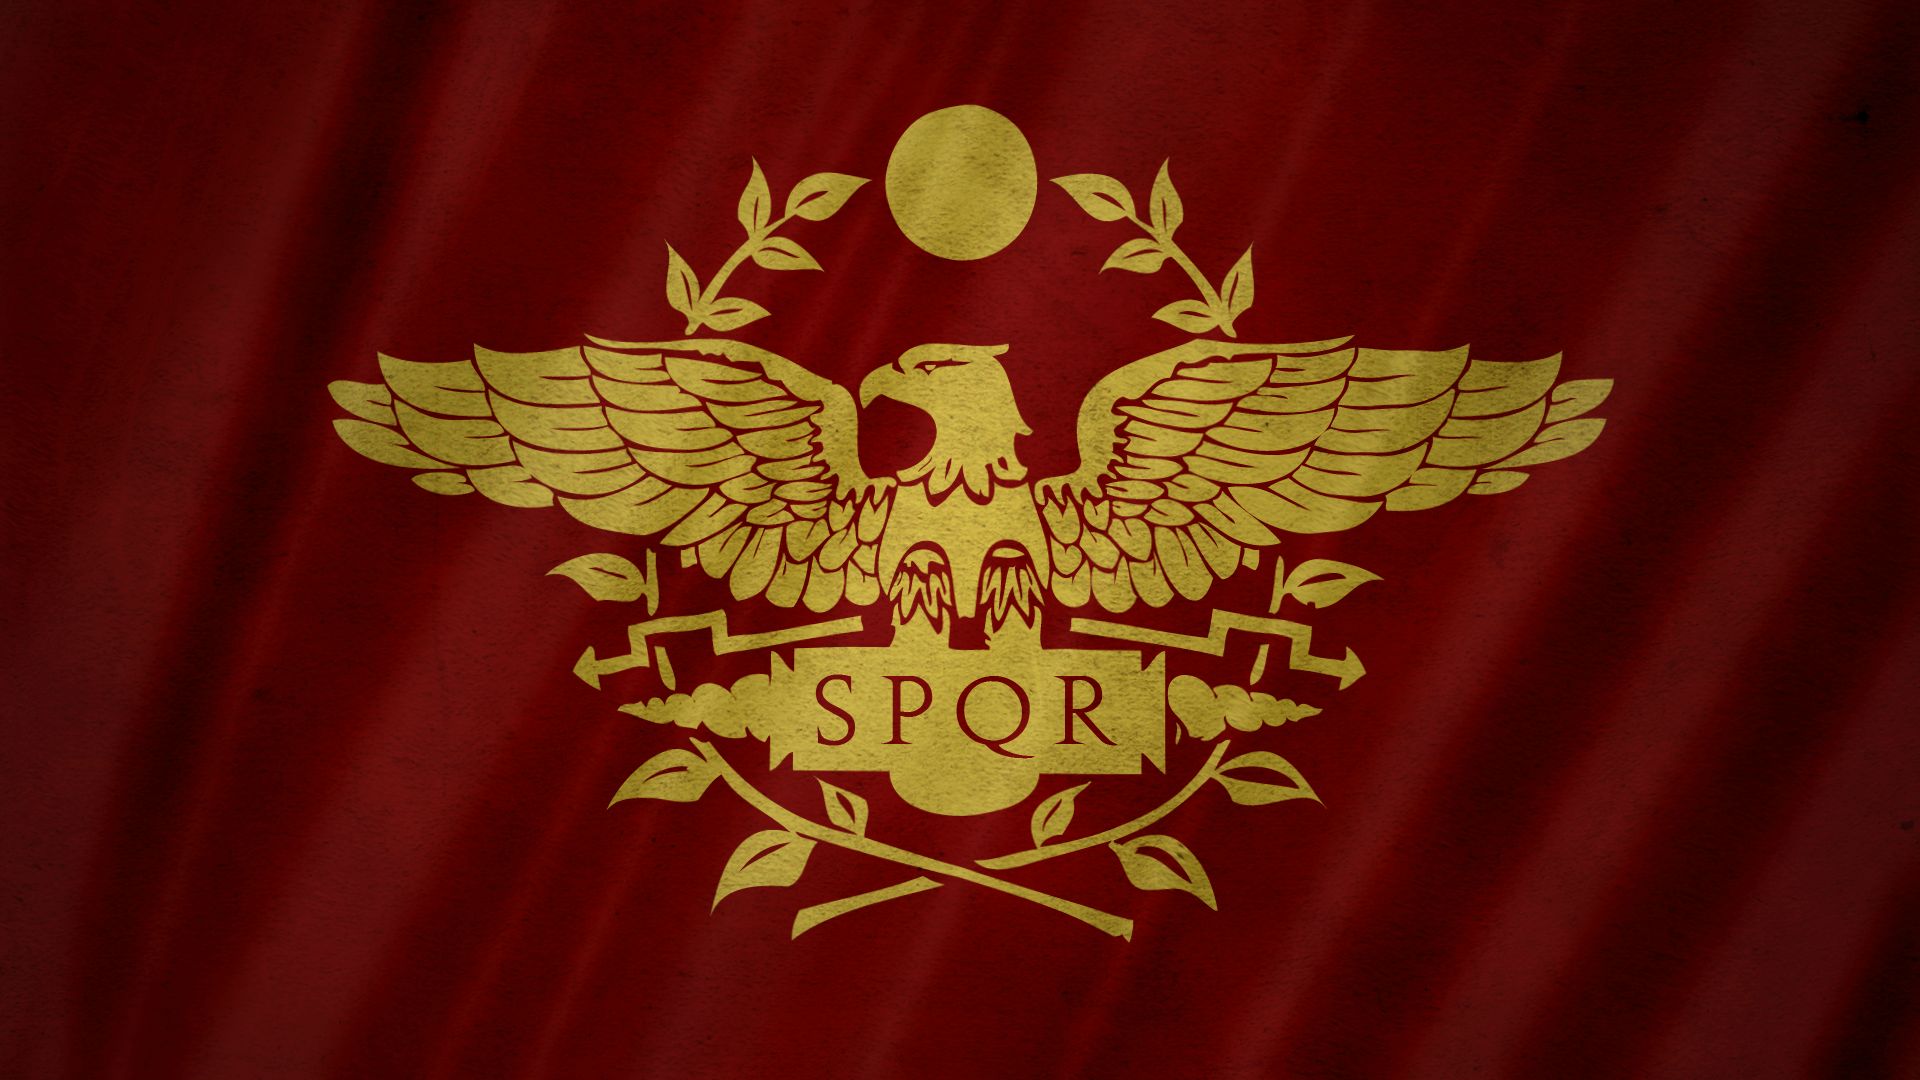 Roman Empire Wallpaper - Wg